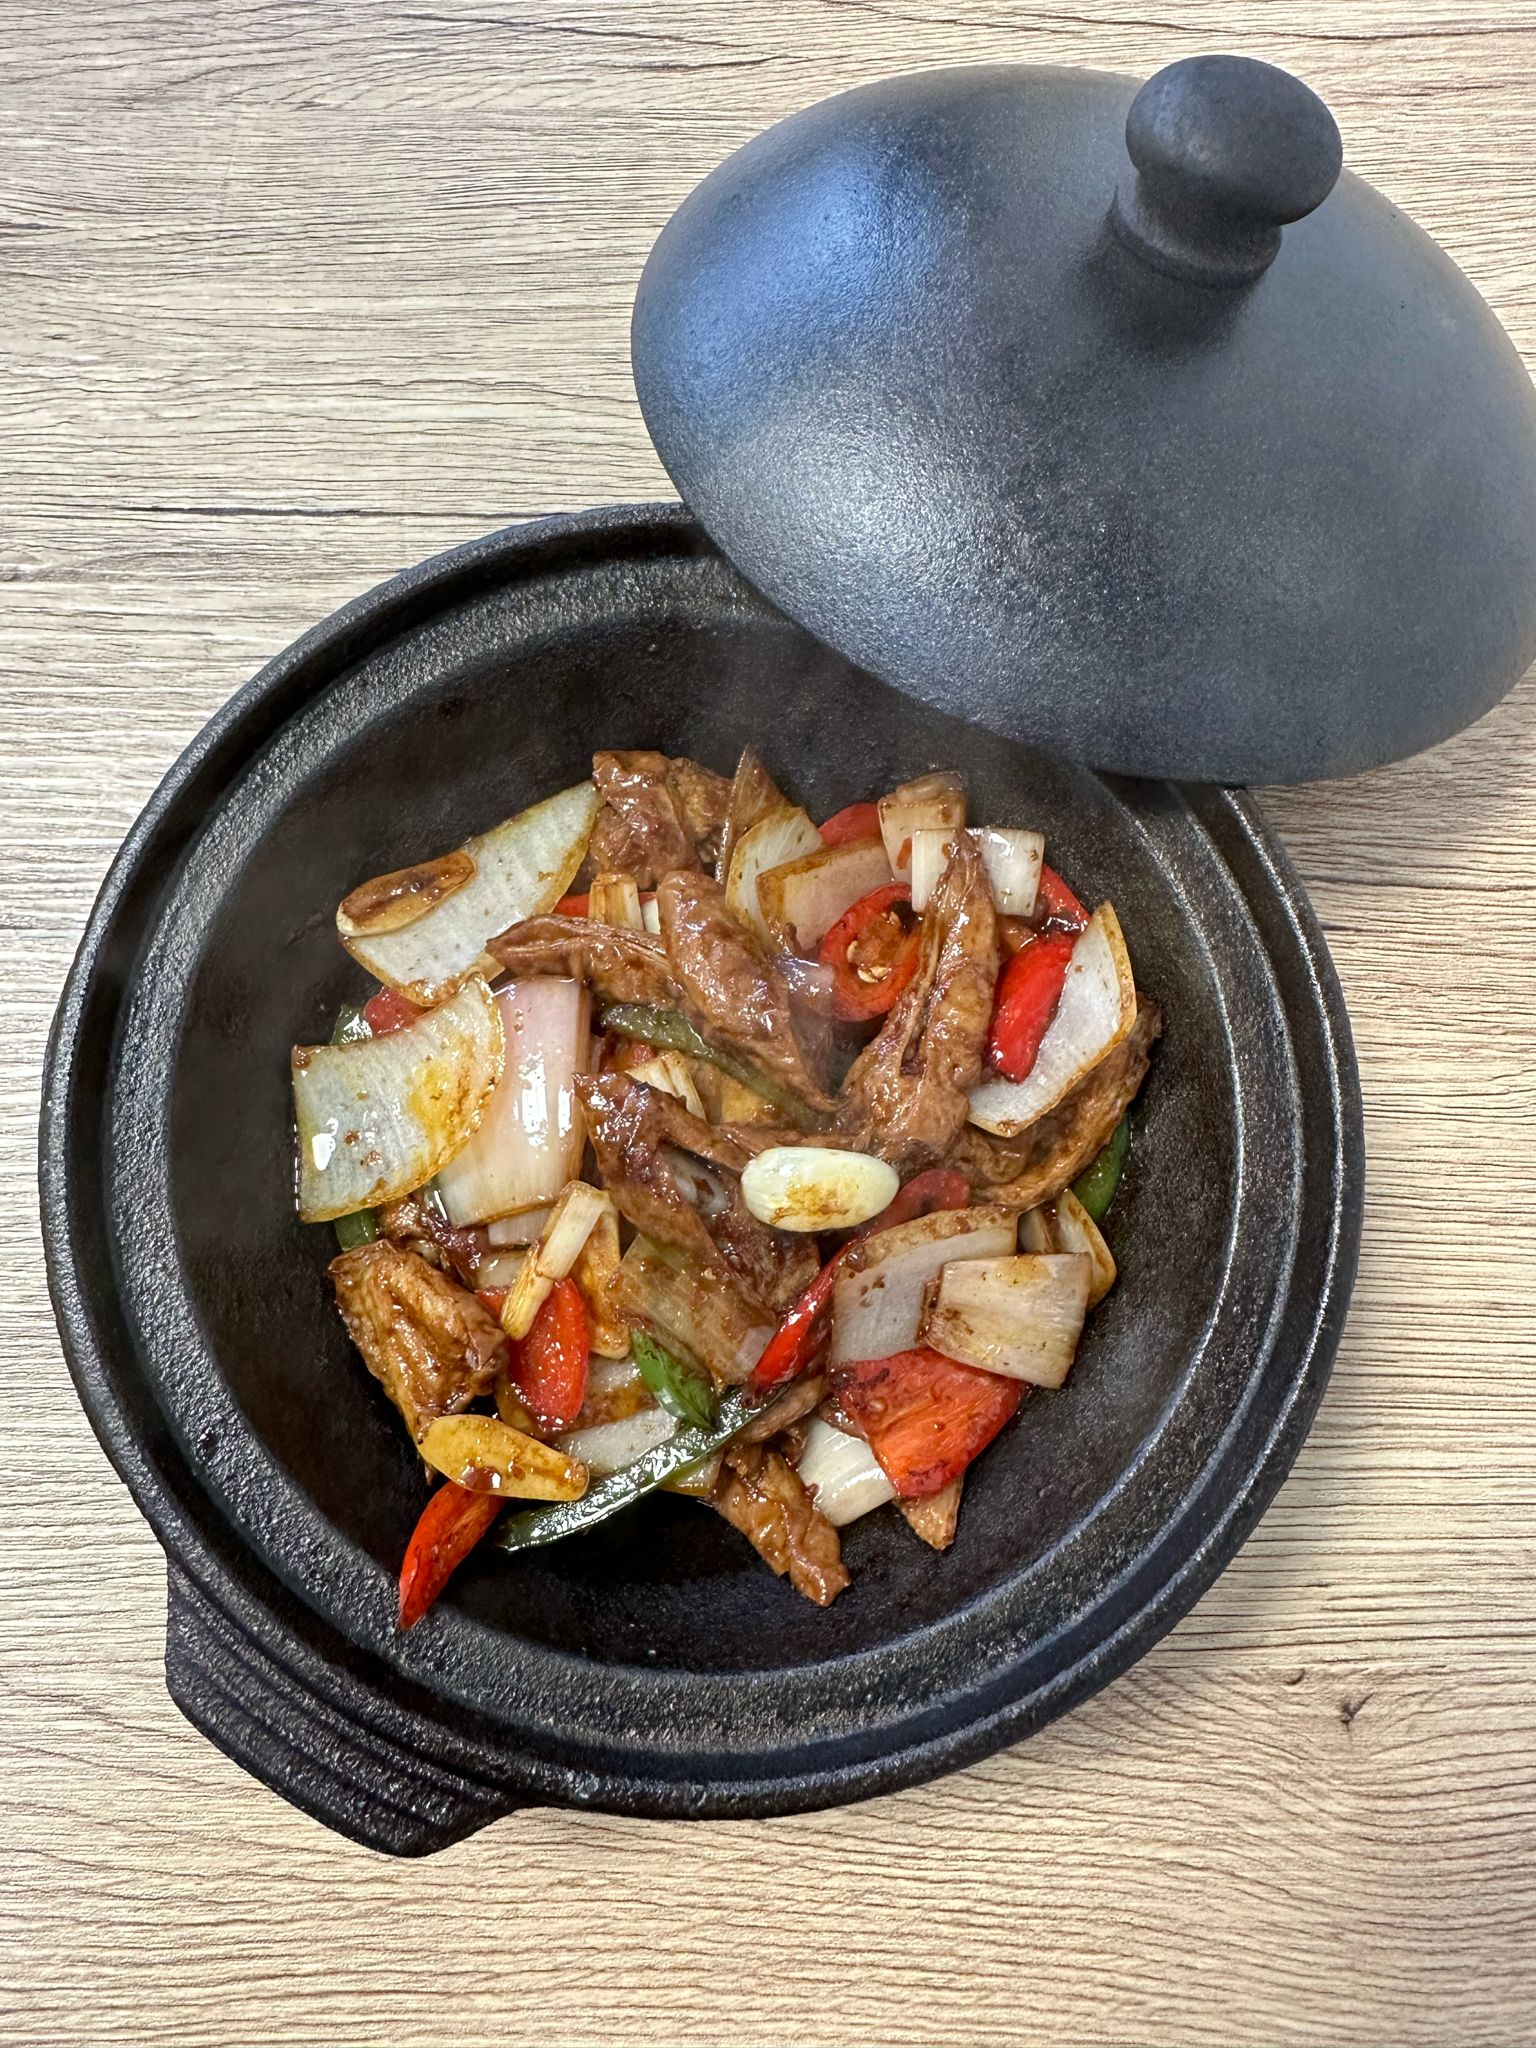 辣炒豬大腸 Wok-Fried Spicy Pork Intestines W/ Garlic & Onion🌶